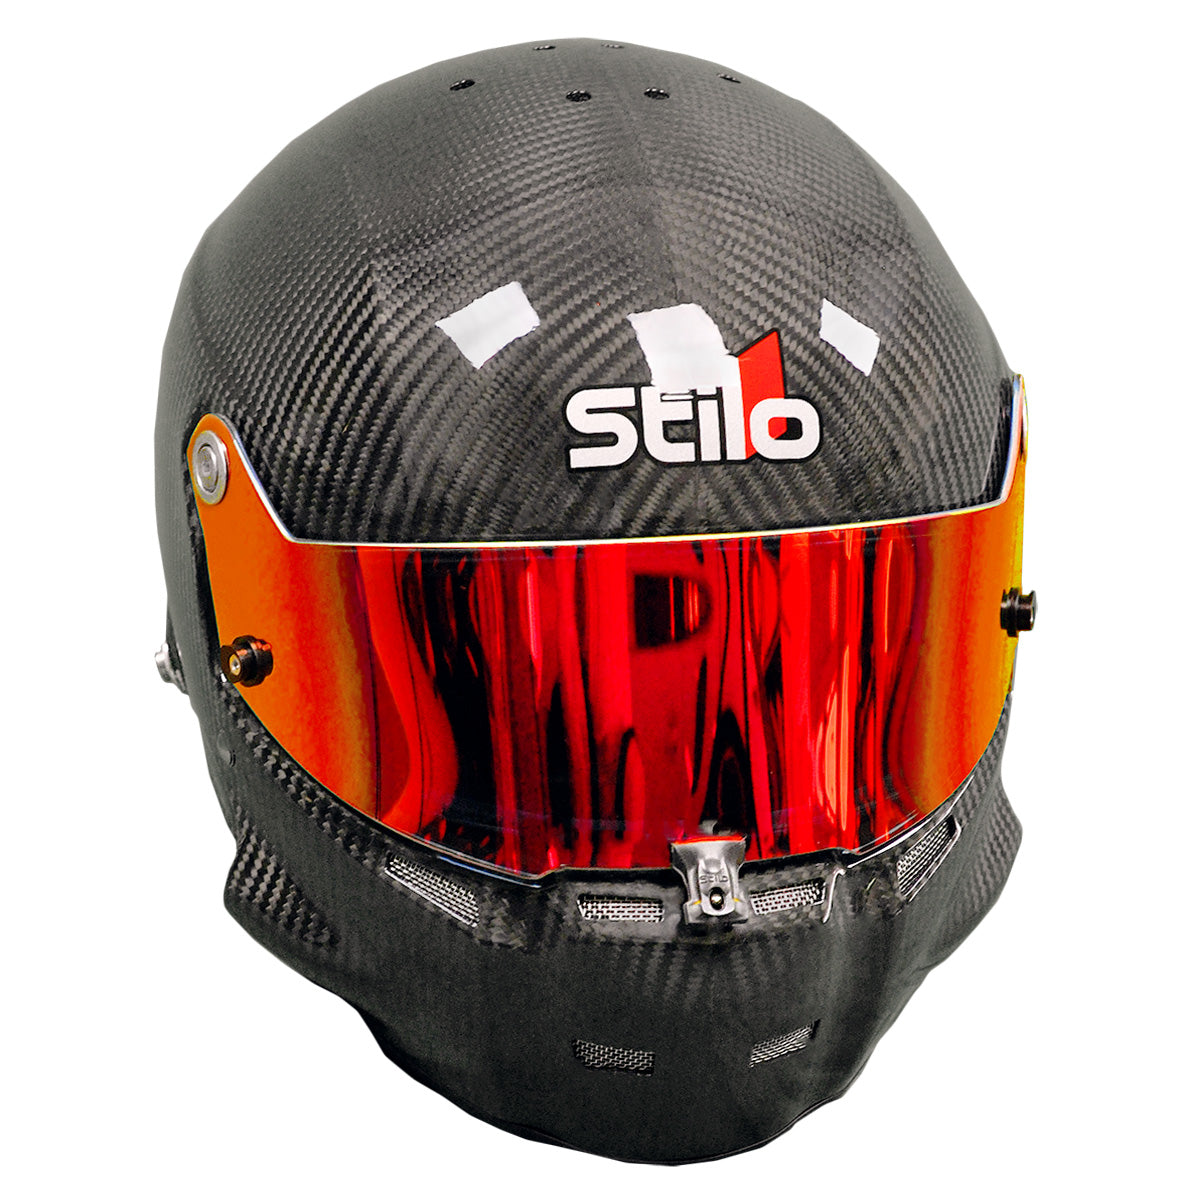 Stilo Iridium Red tinted helmet shield at the best price possible.